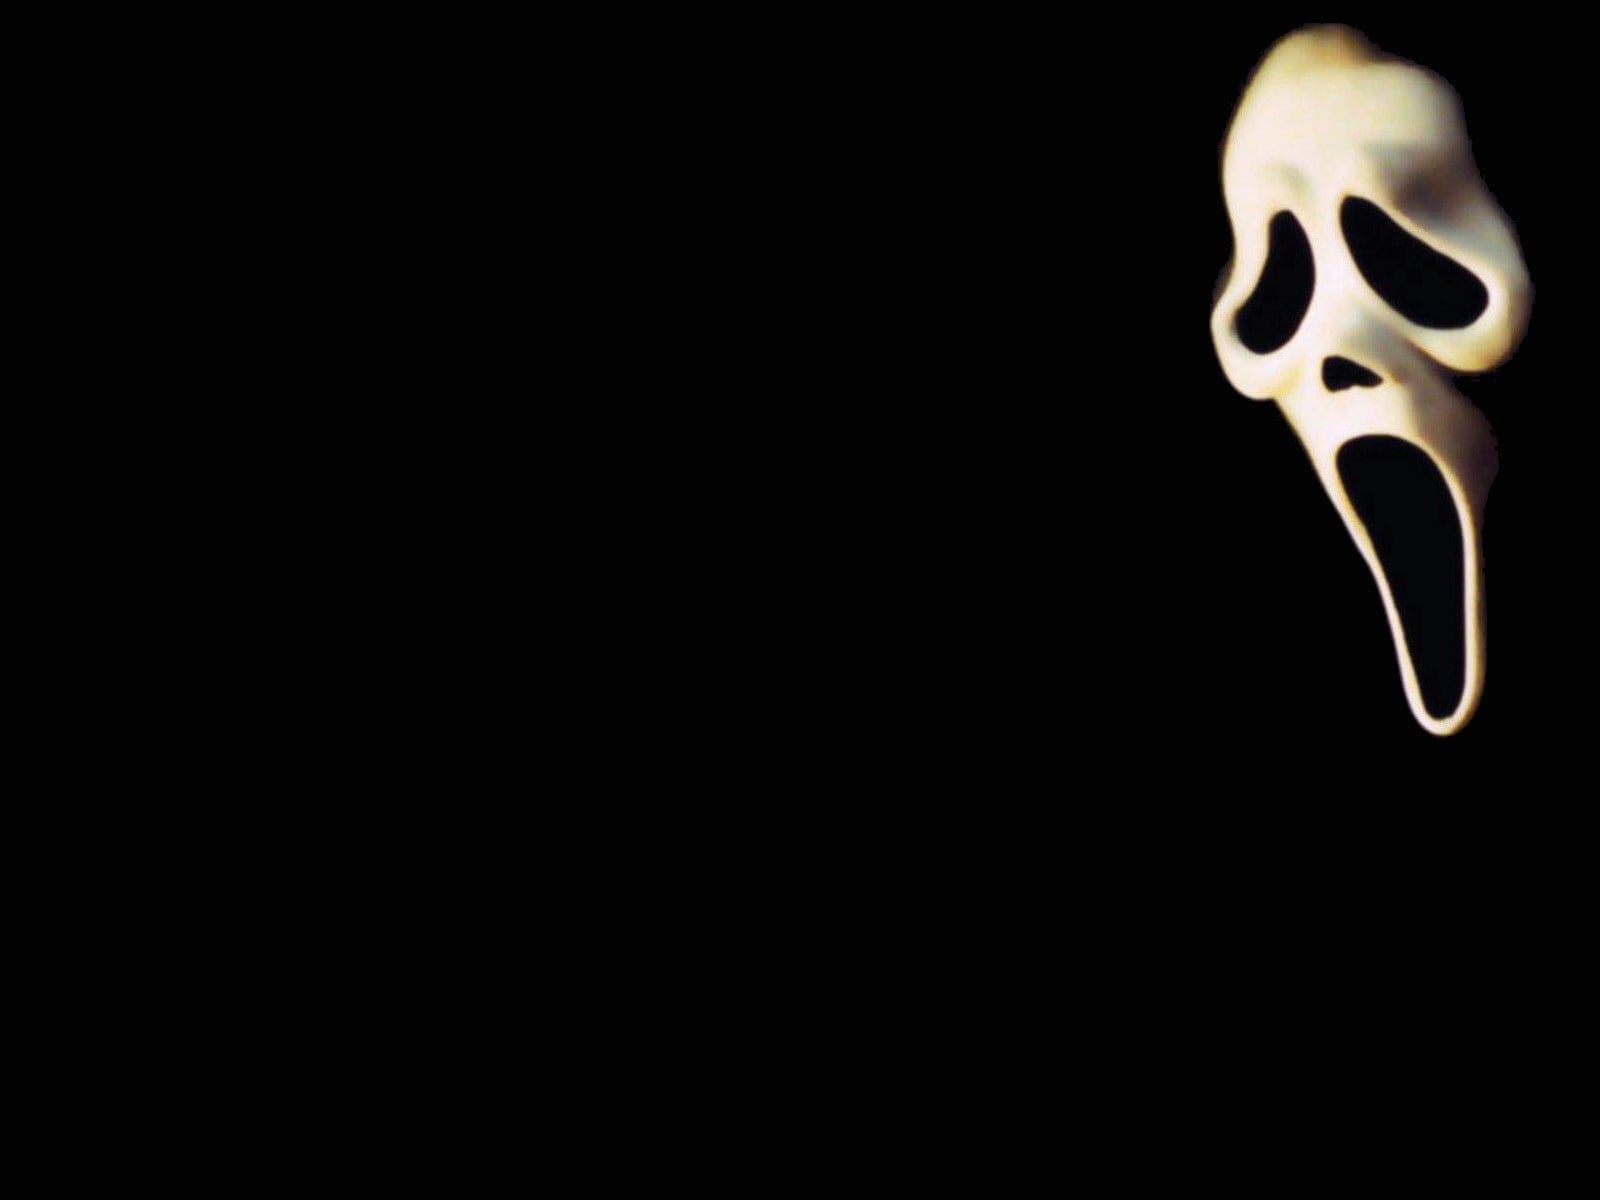 Scream mask on a black background - Ghostface